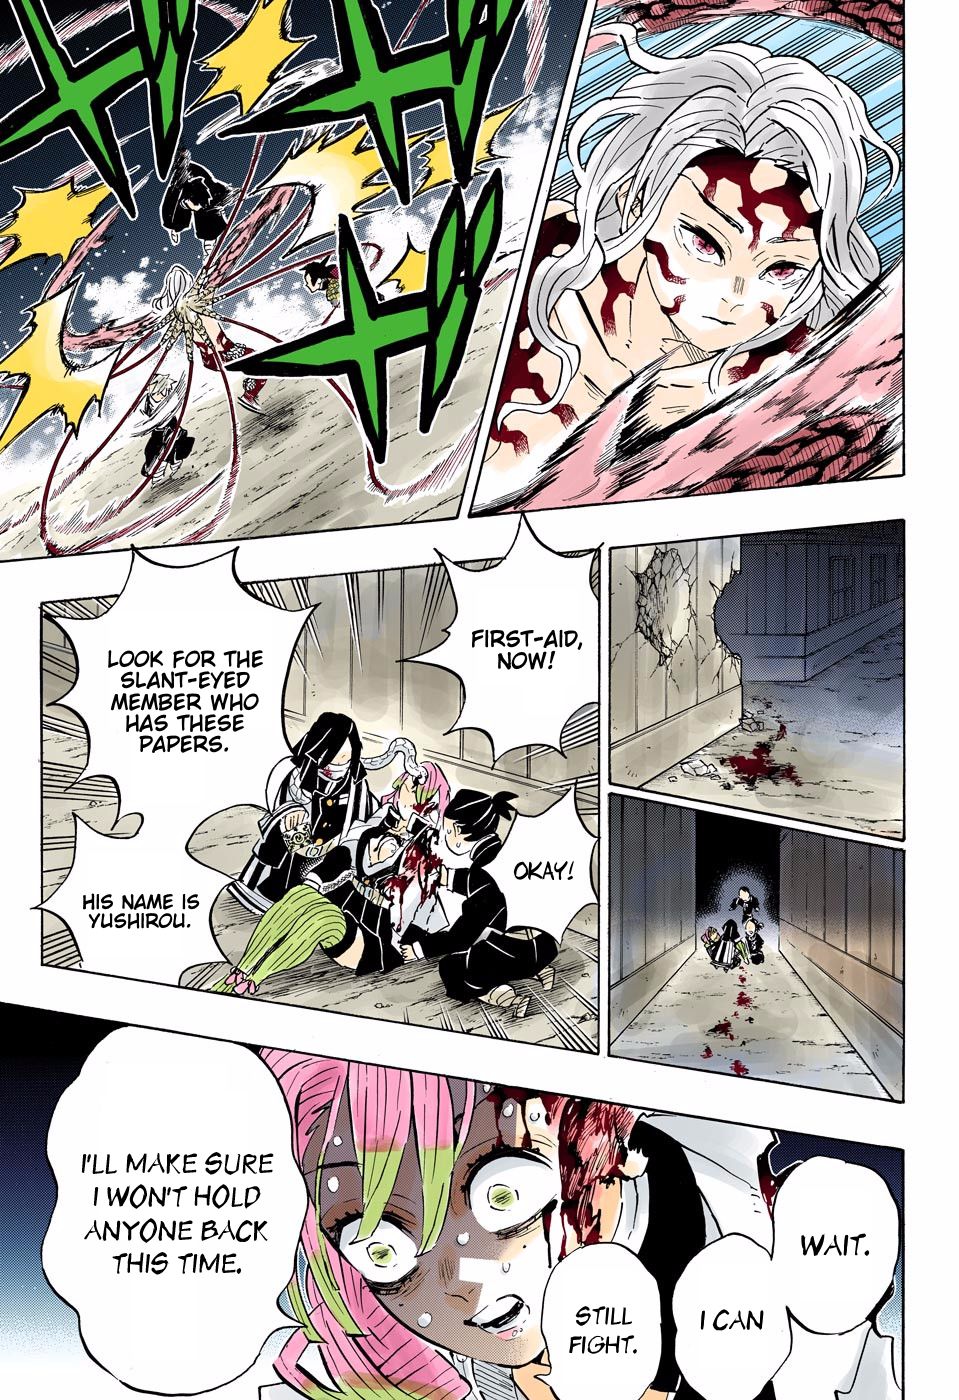 Leer Manga Demon Slayer: Kimetsu No Yaiba » D1Manga - Mangas